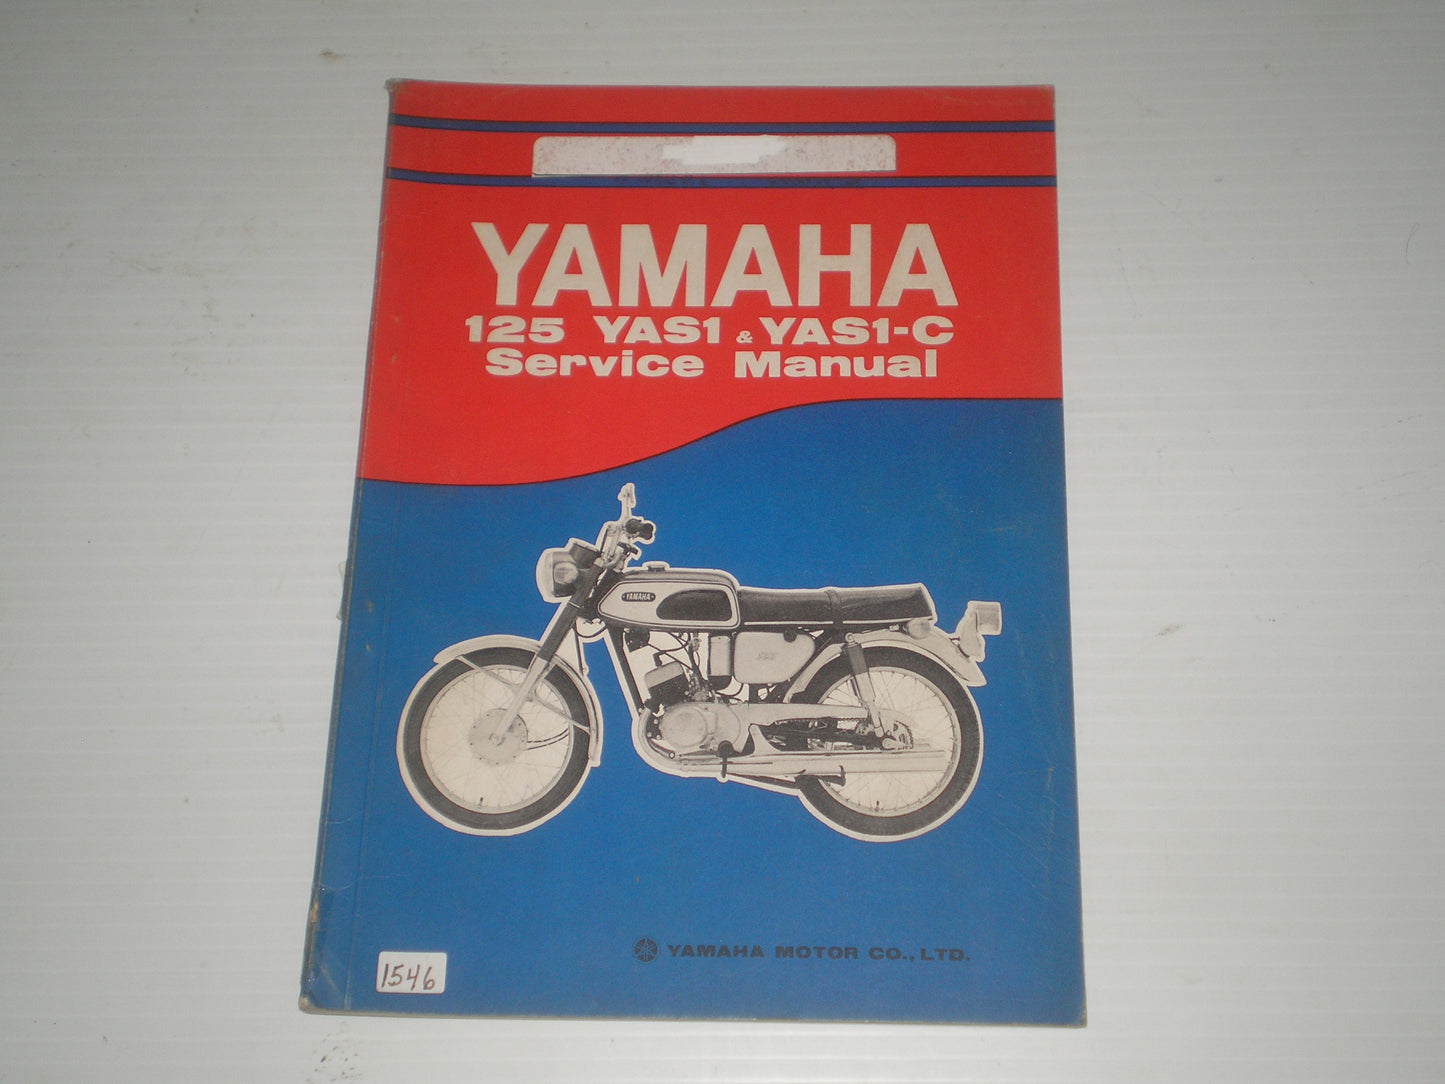 YAMAHA 125 Model  YAS1  YAS1-C  1969   Service Manual  #1546